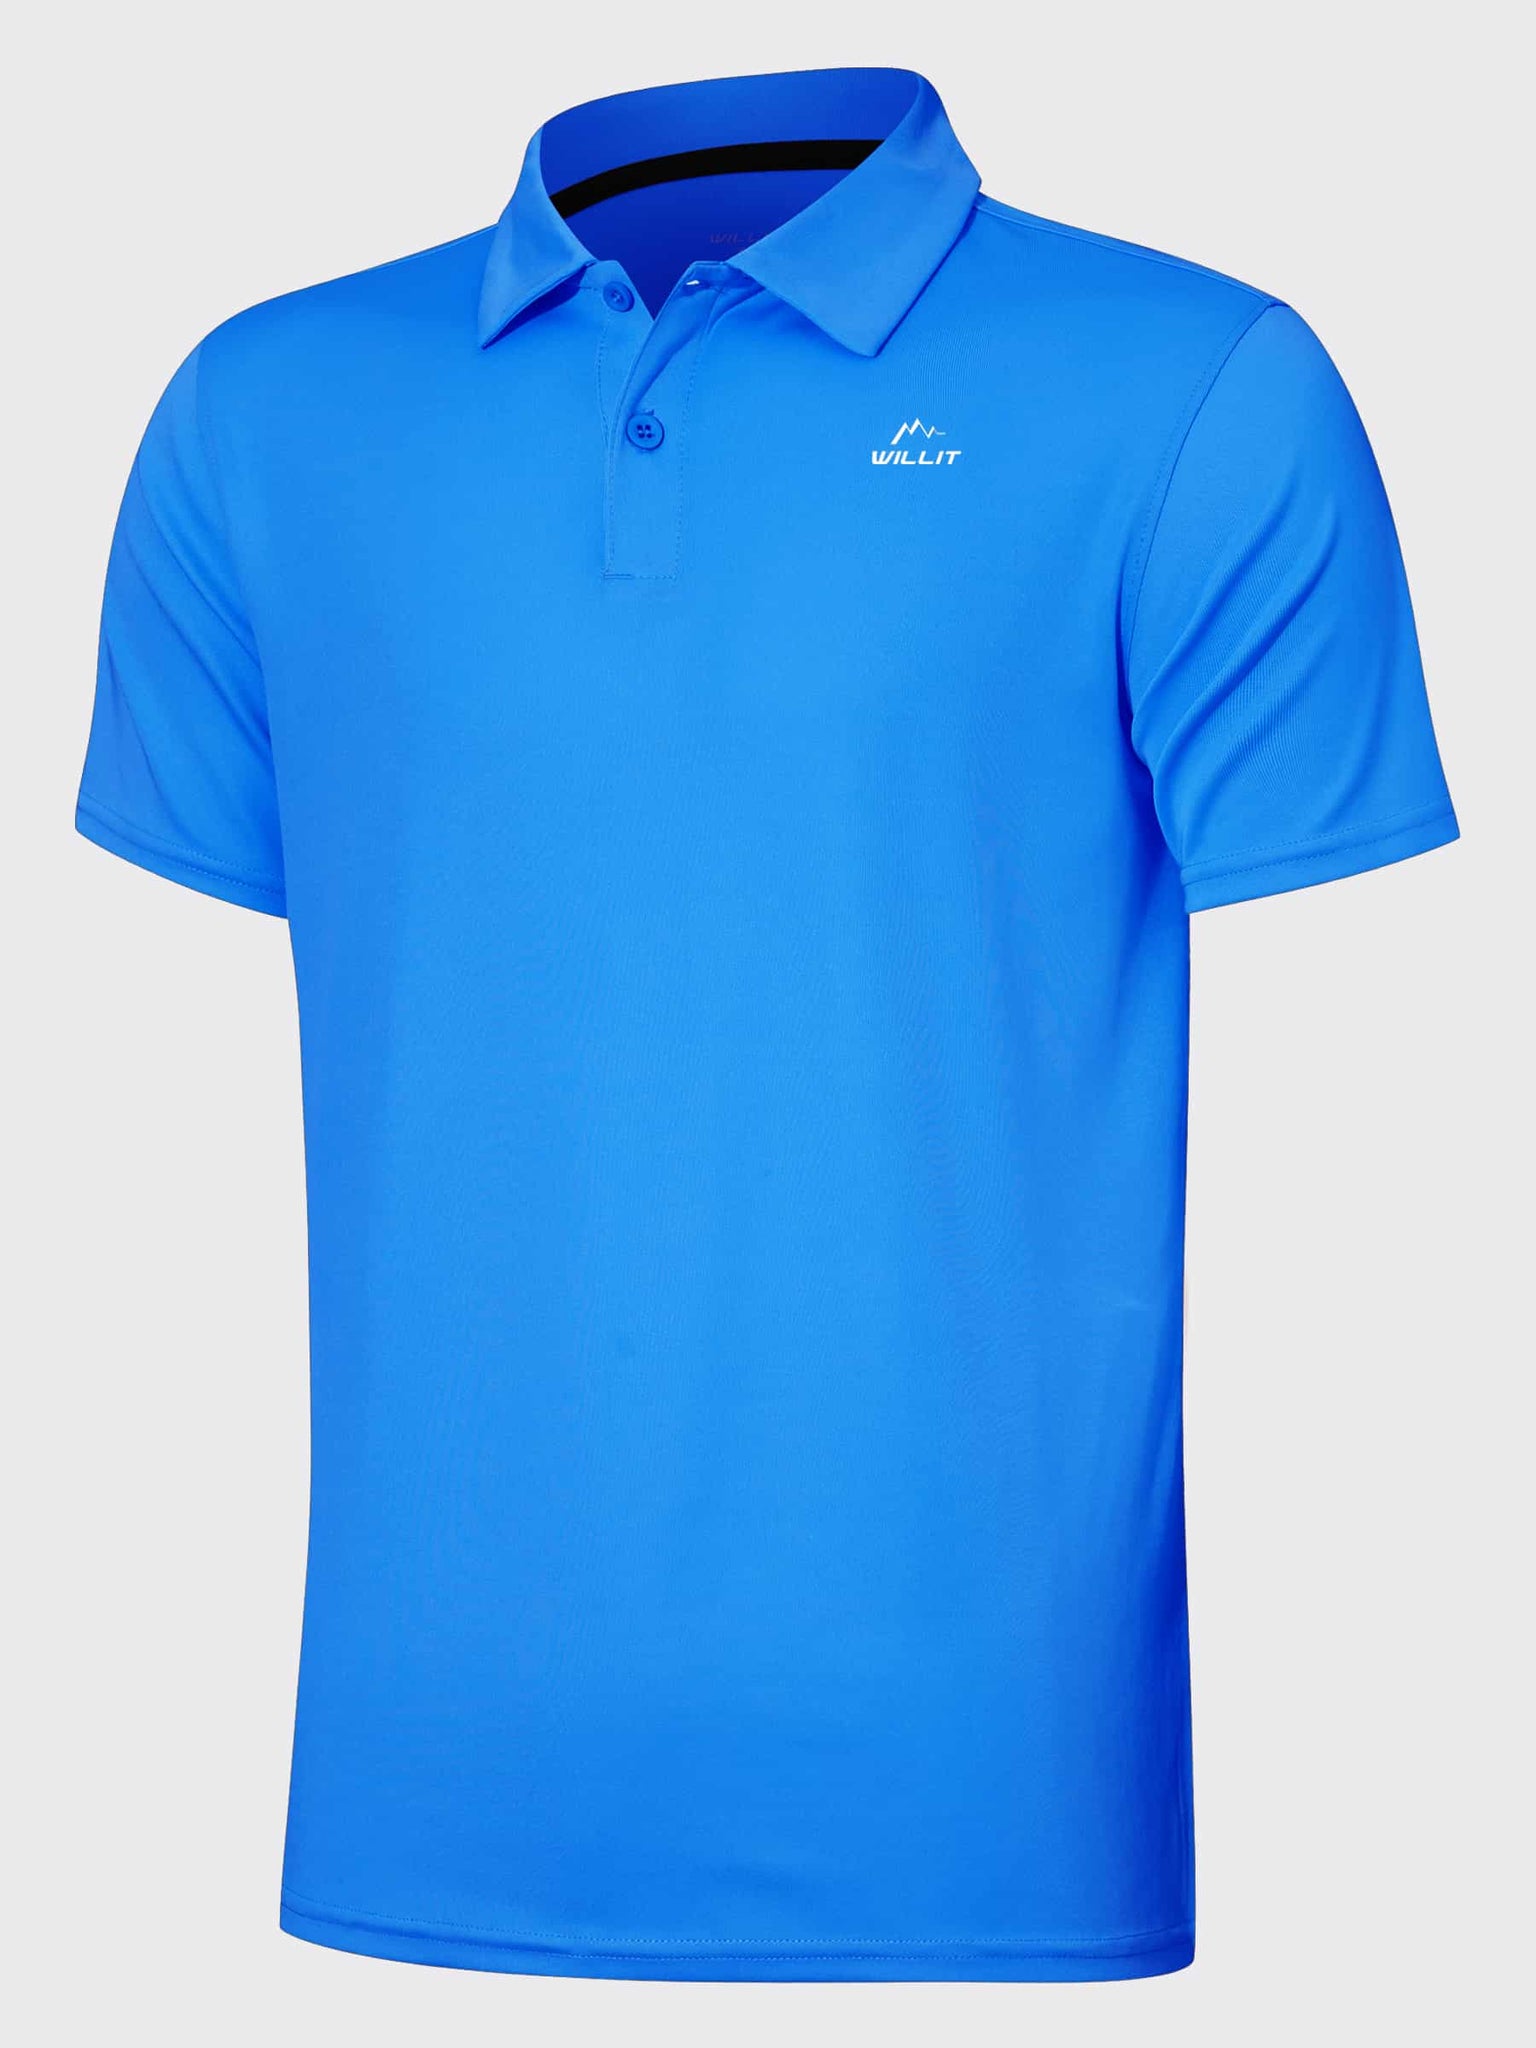 Youth Golf Polo Sun Shirts_BrilliantBlue_laydown1